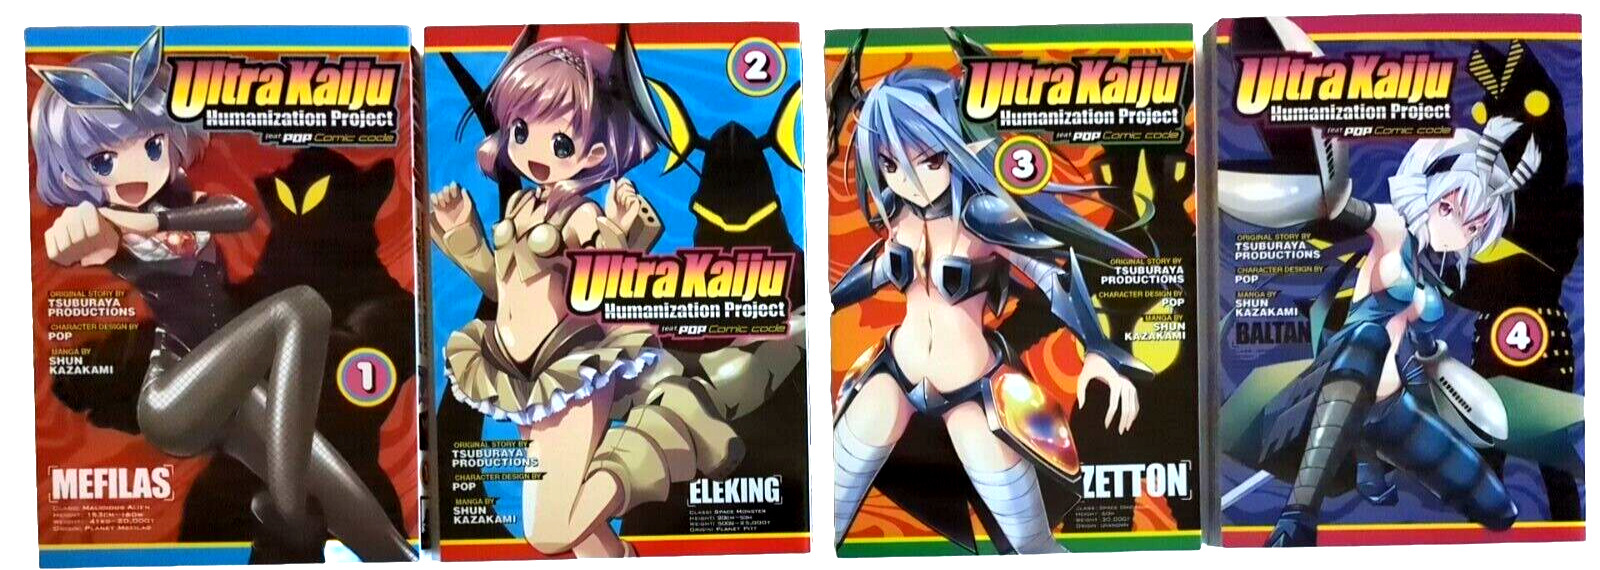 Ultra Kaiju Humanization Project Vol 1-4 Manga Lot, 2018, Shun Kazakami